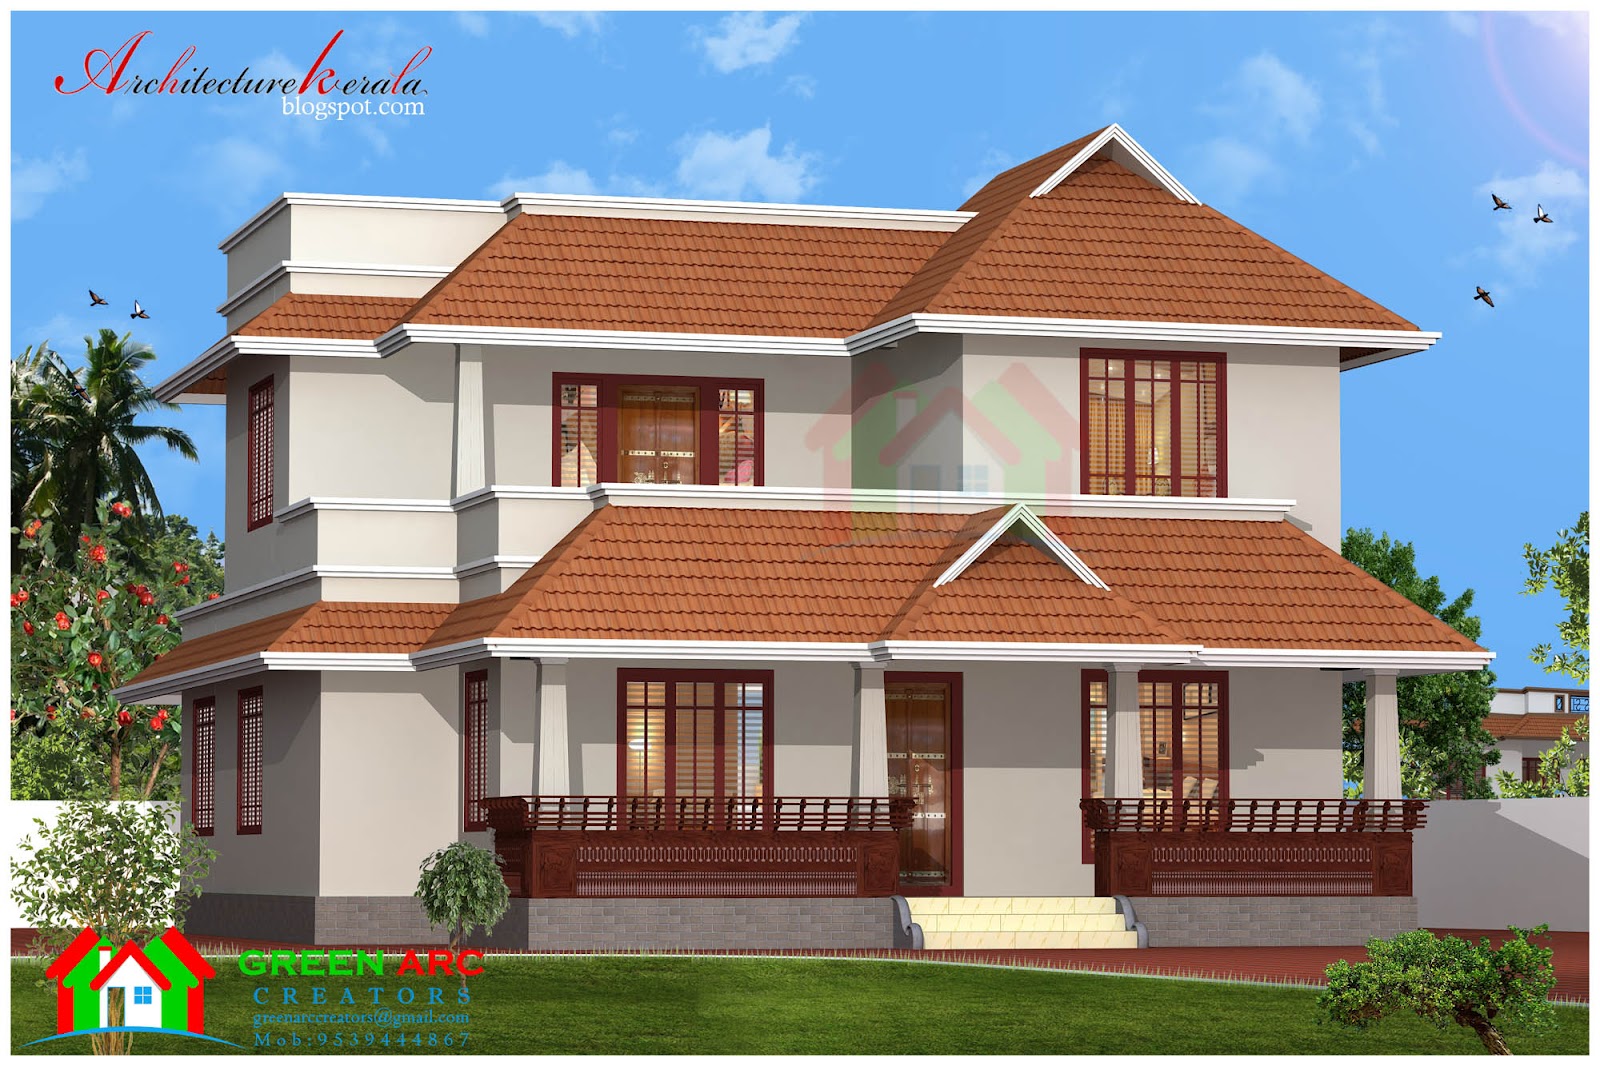 Architecture Kerala TRADITIONAL STYLE KERALA HOUSE PLAN